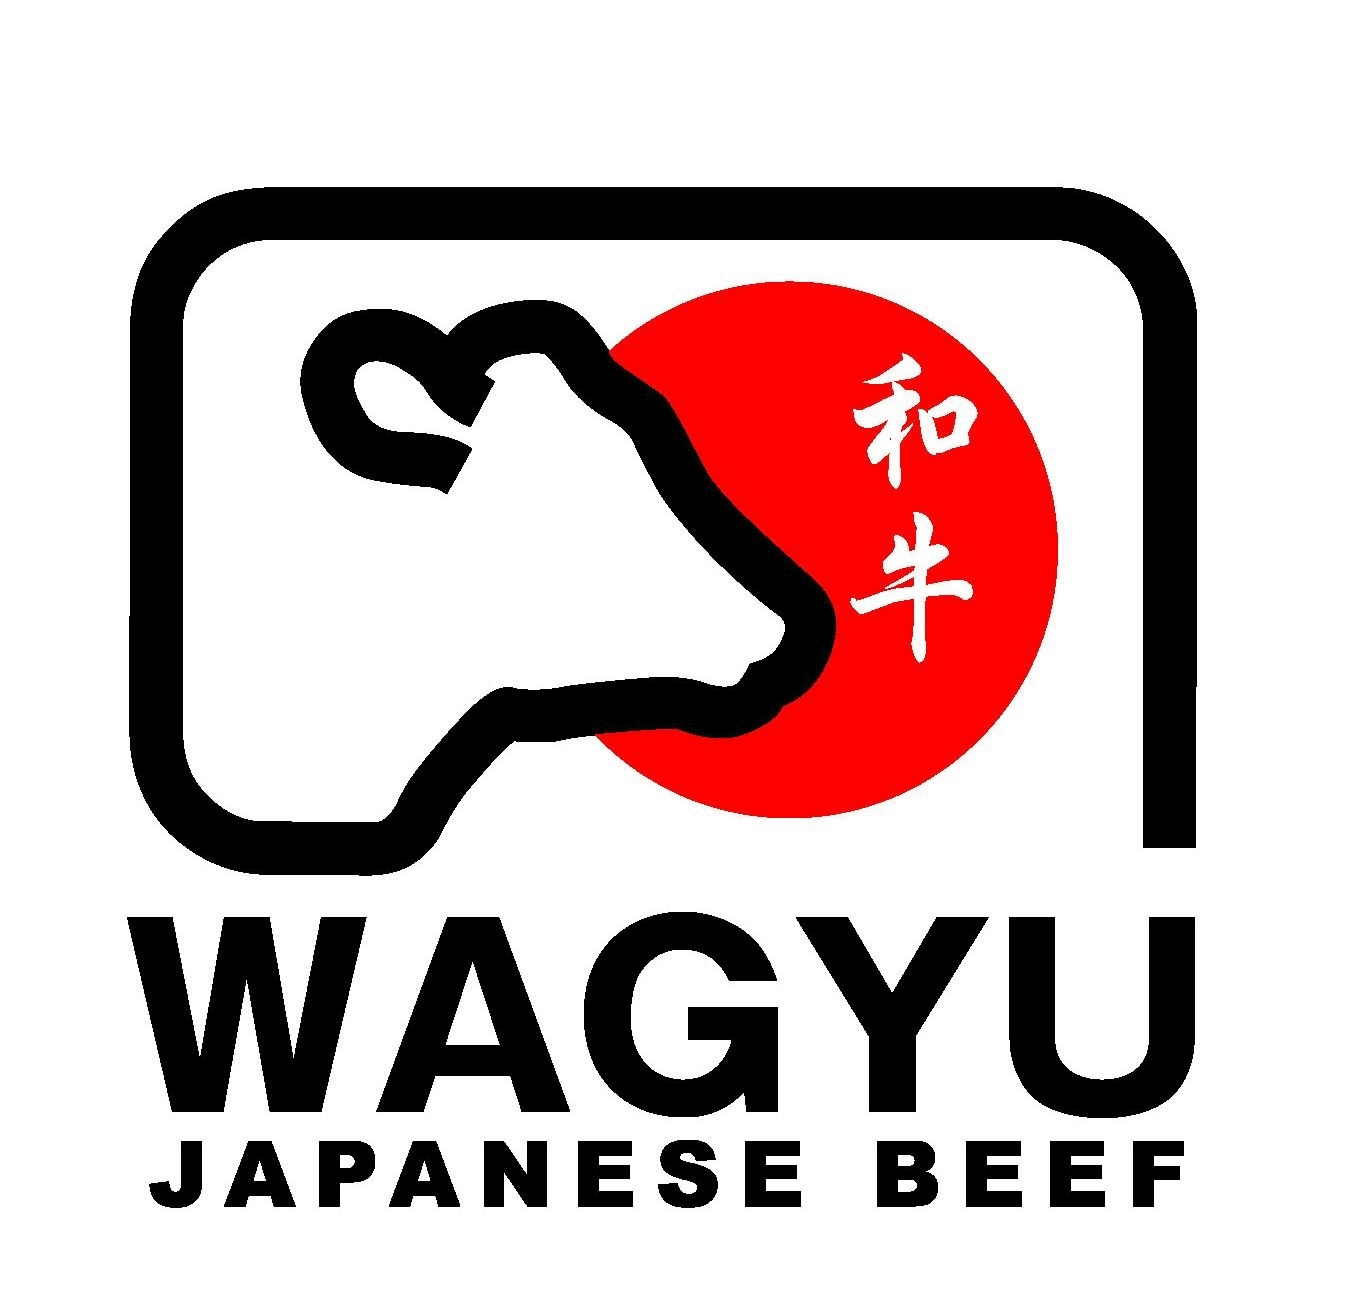 Beef Logo - Wagyu Japanese Beef. Beef & Lamb recipes. Kobe beef, Japan logo